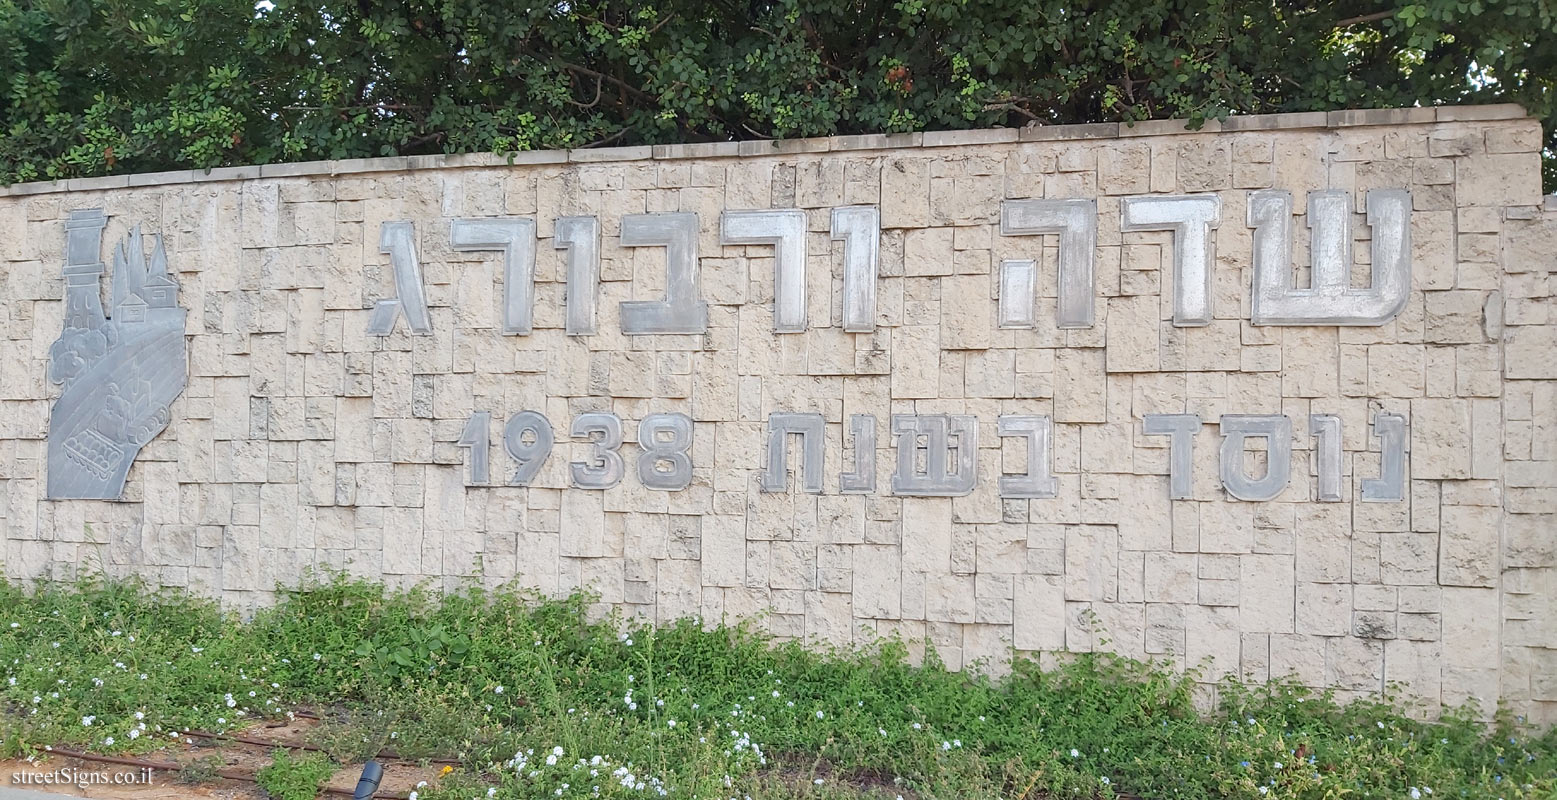 Sde Warburg - entrance sign to the moshav